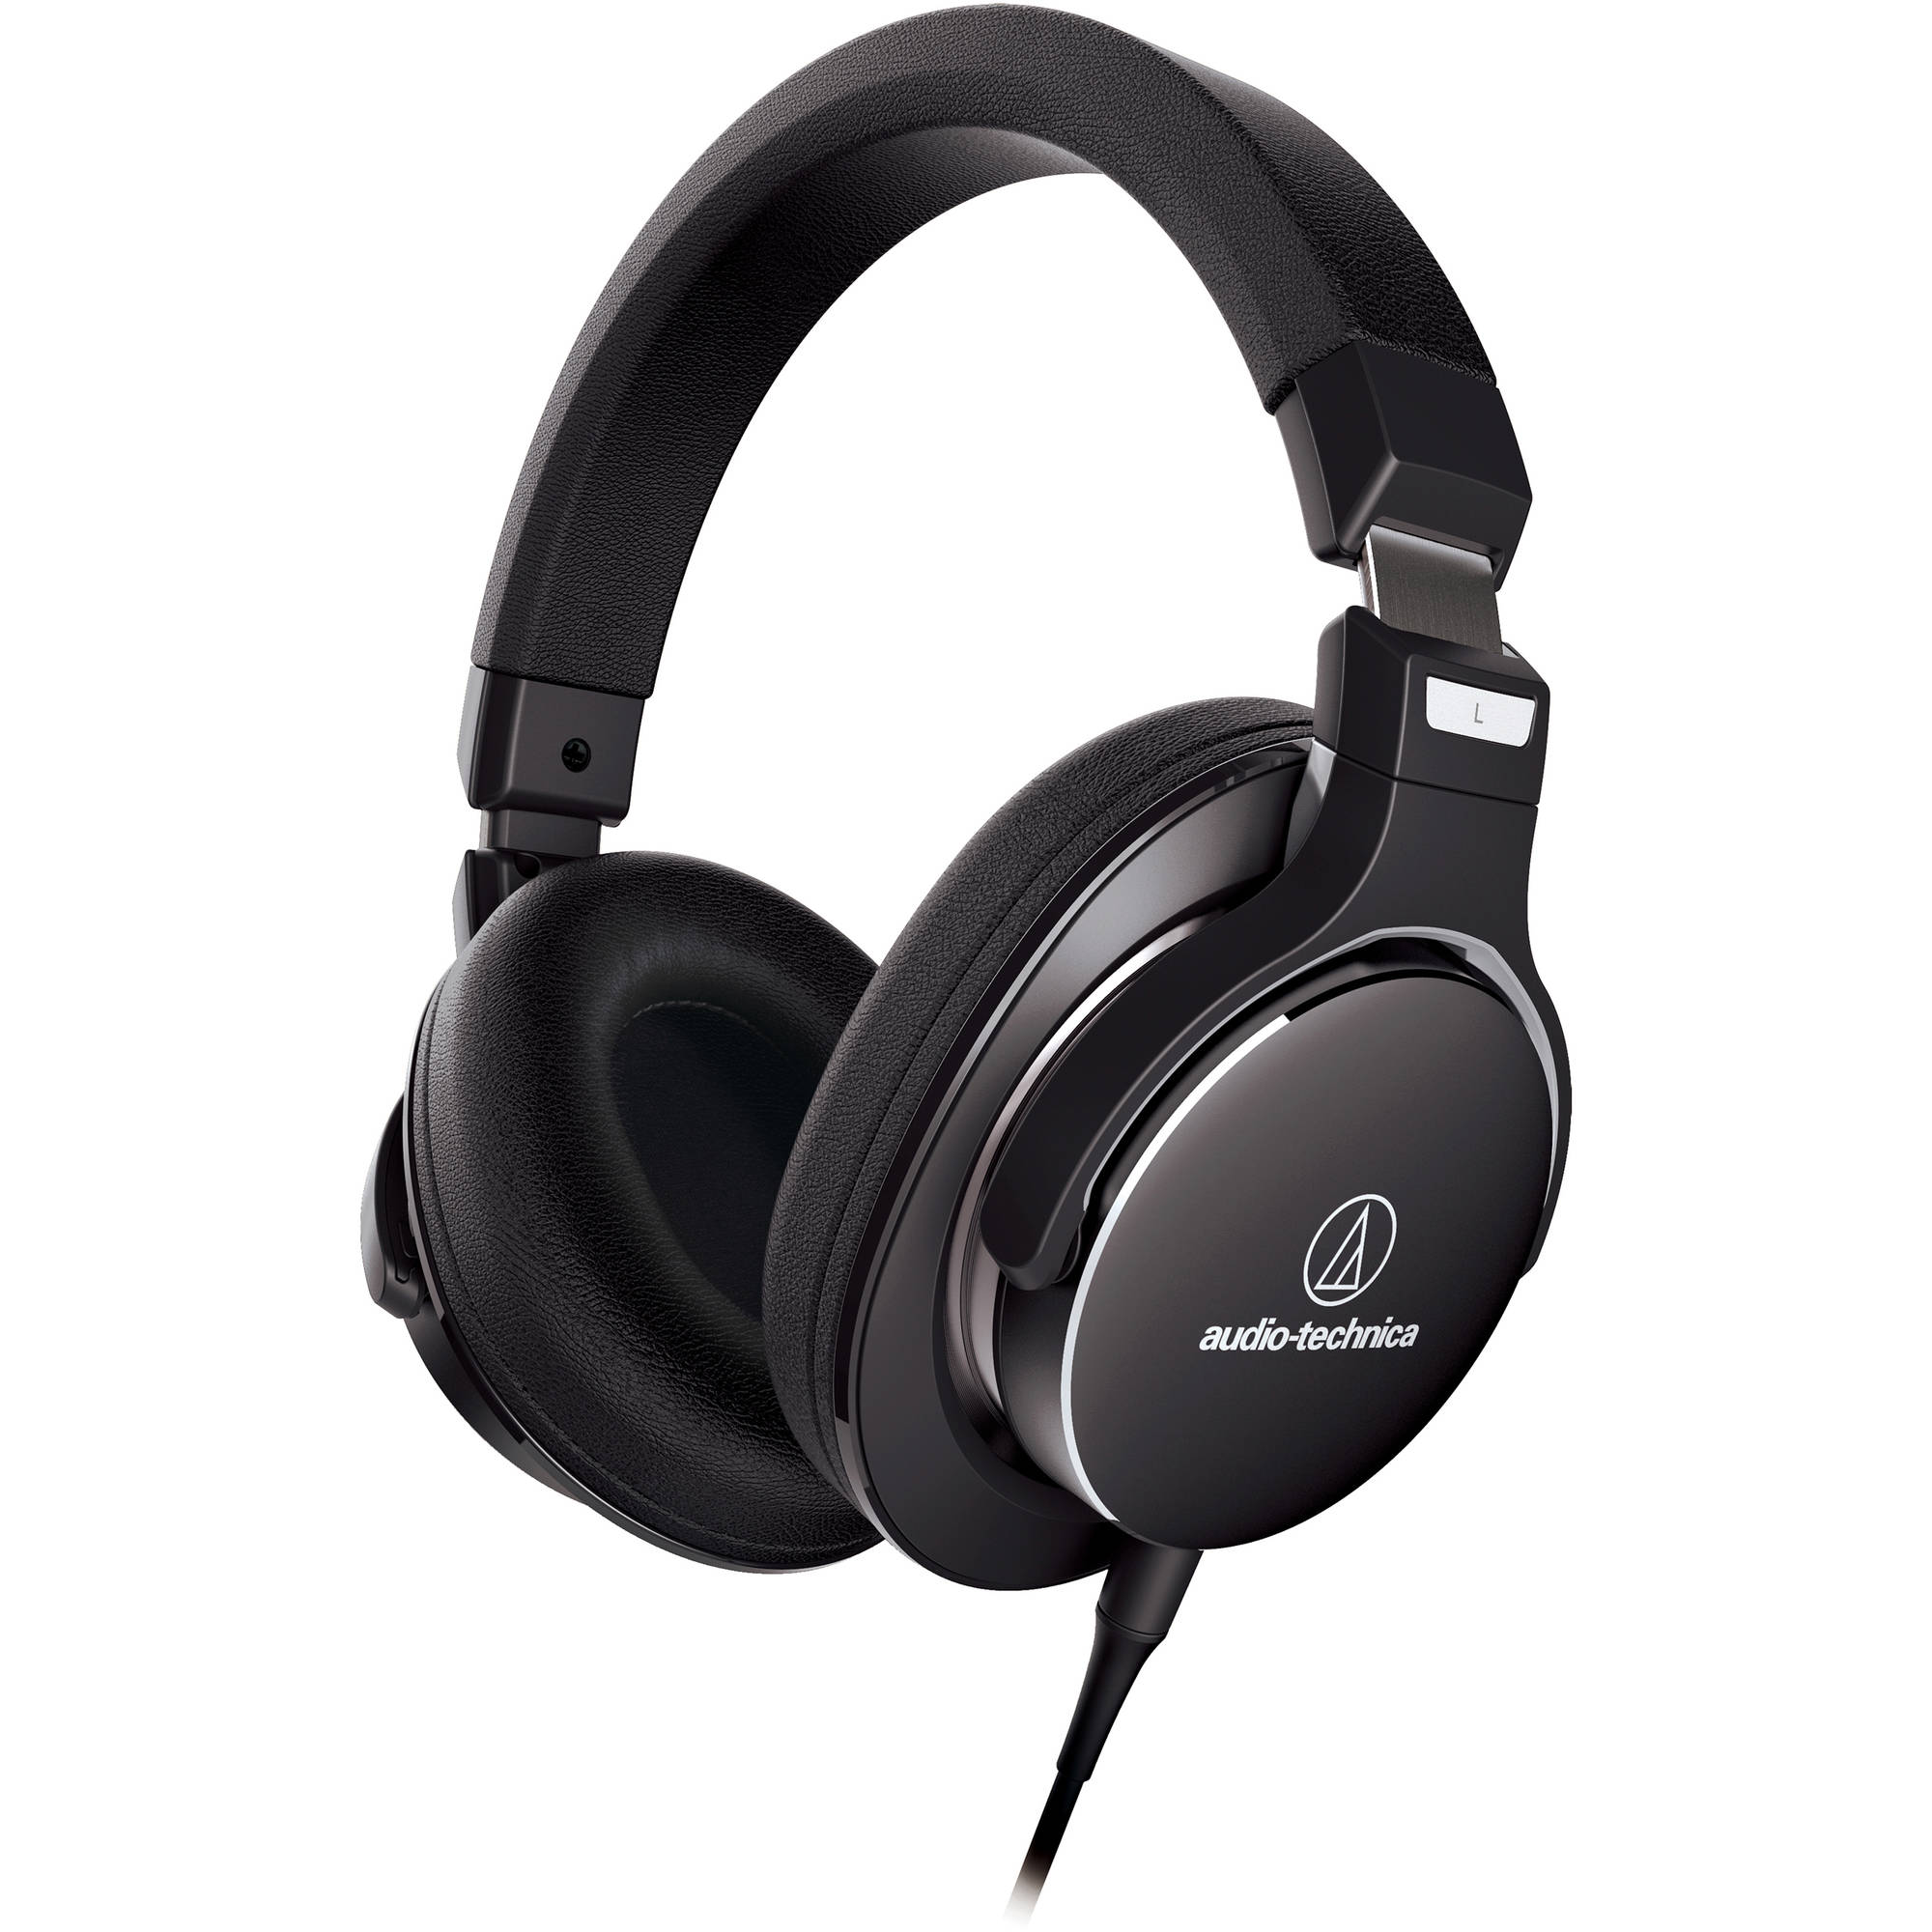 Audio-Technica ATH-MSR7NC SonicPro High-Resolution Active Noise Cancellation Headphones Black